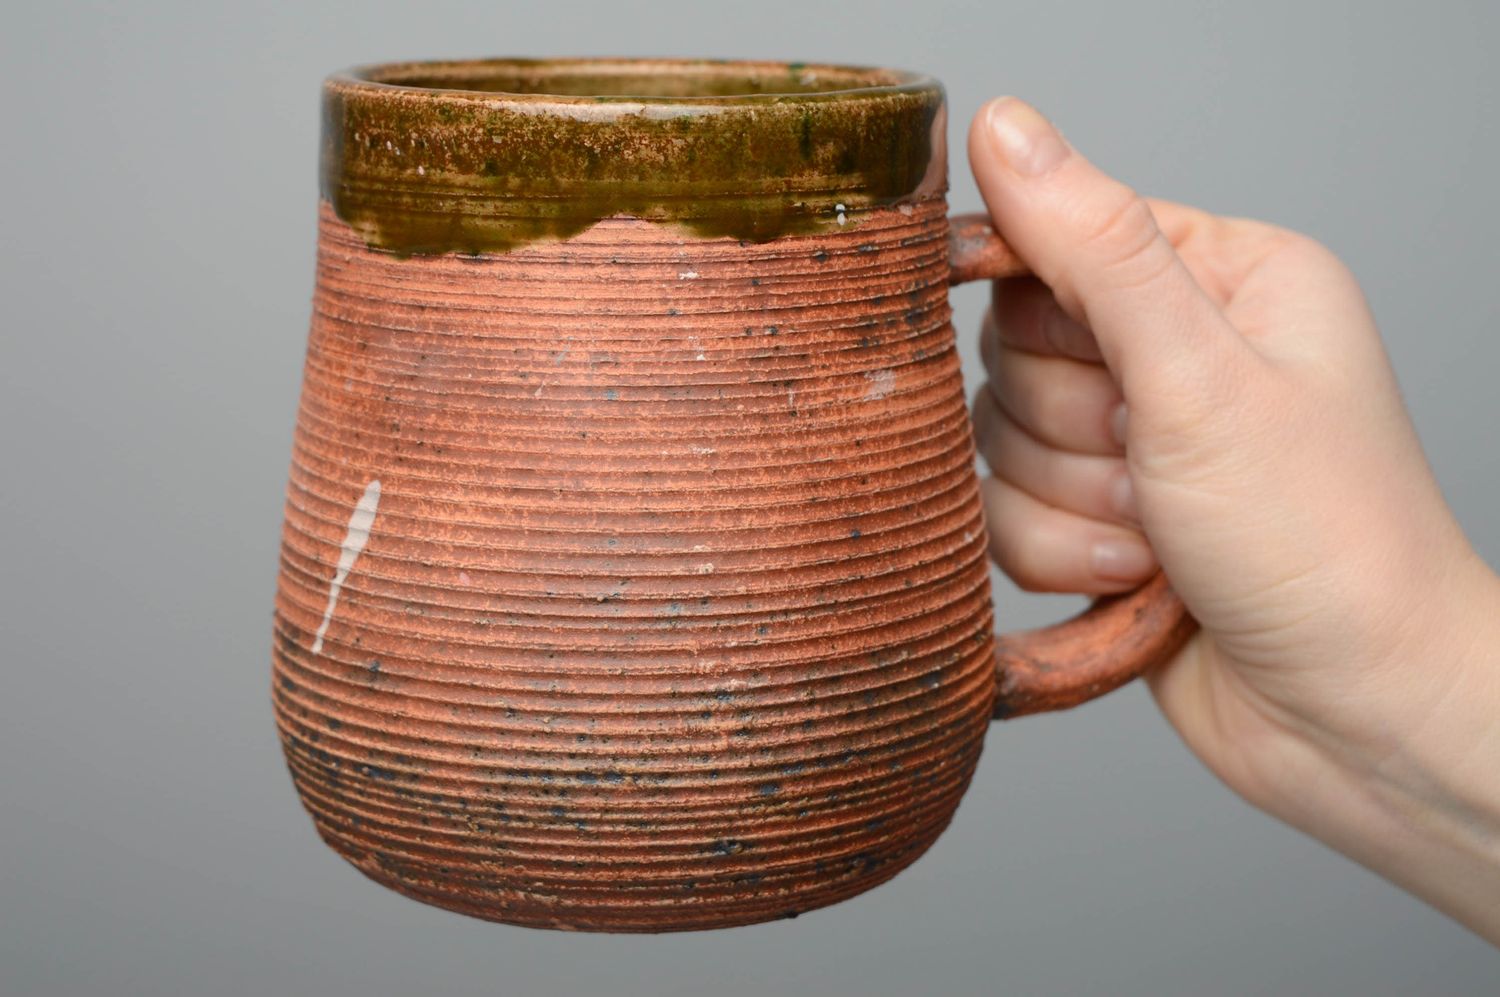 Giant 30 oz ceramic mug dor coffee, tea, beer with handle and rustic style photo 3